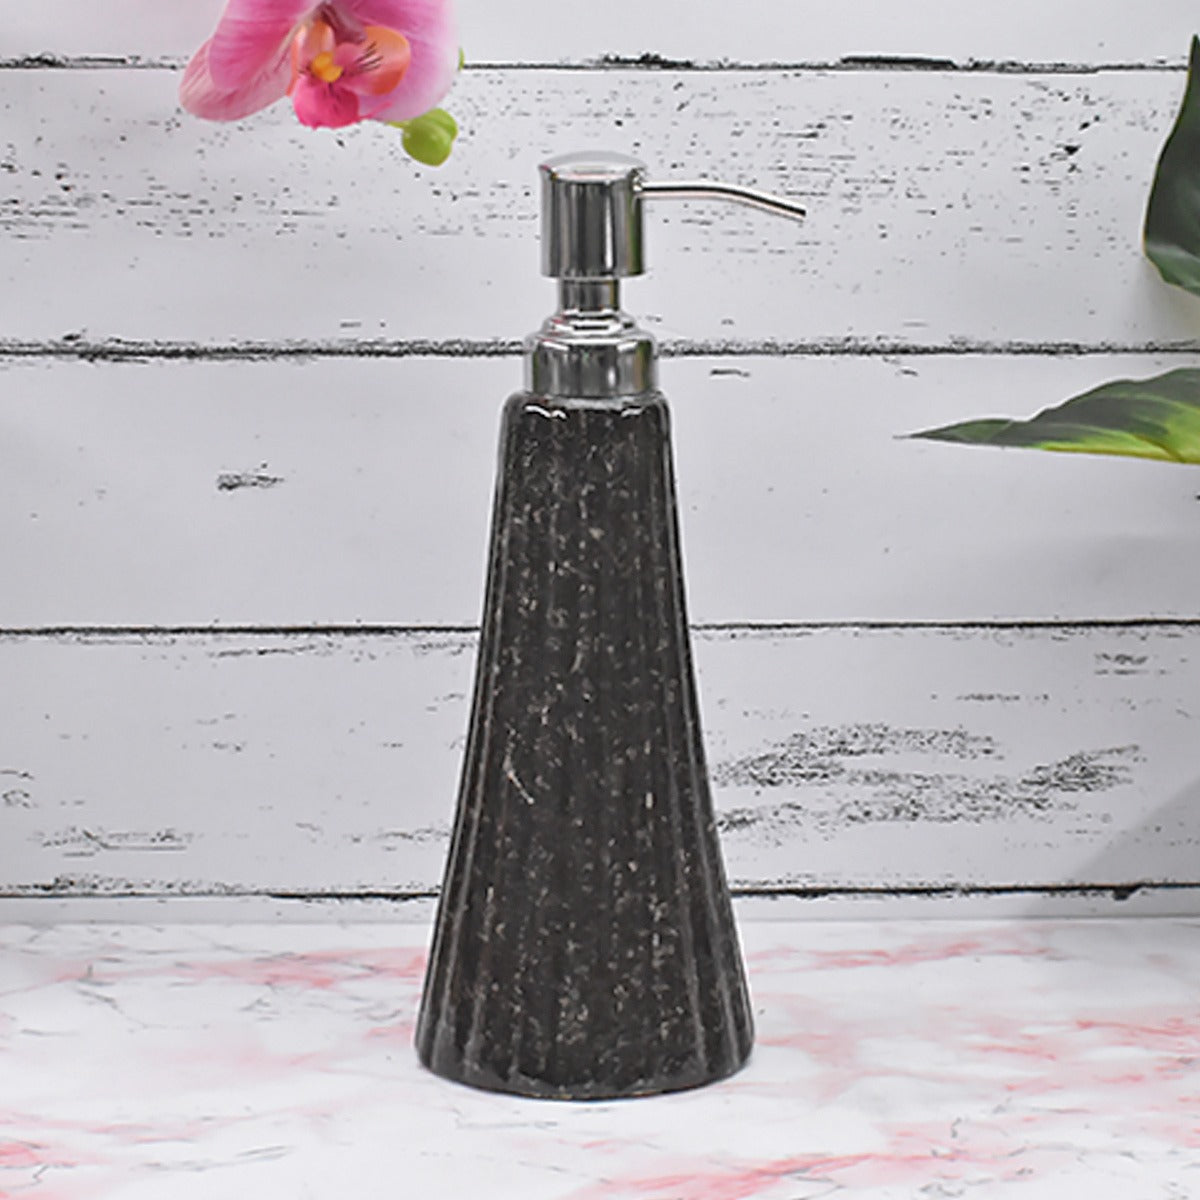 Ceramic Soap Dispenser Pump for Bathroom for Bath Gel, Lotion, Shampoo (9494)